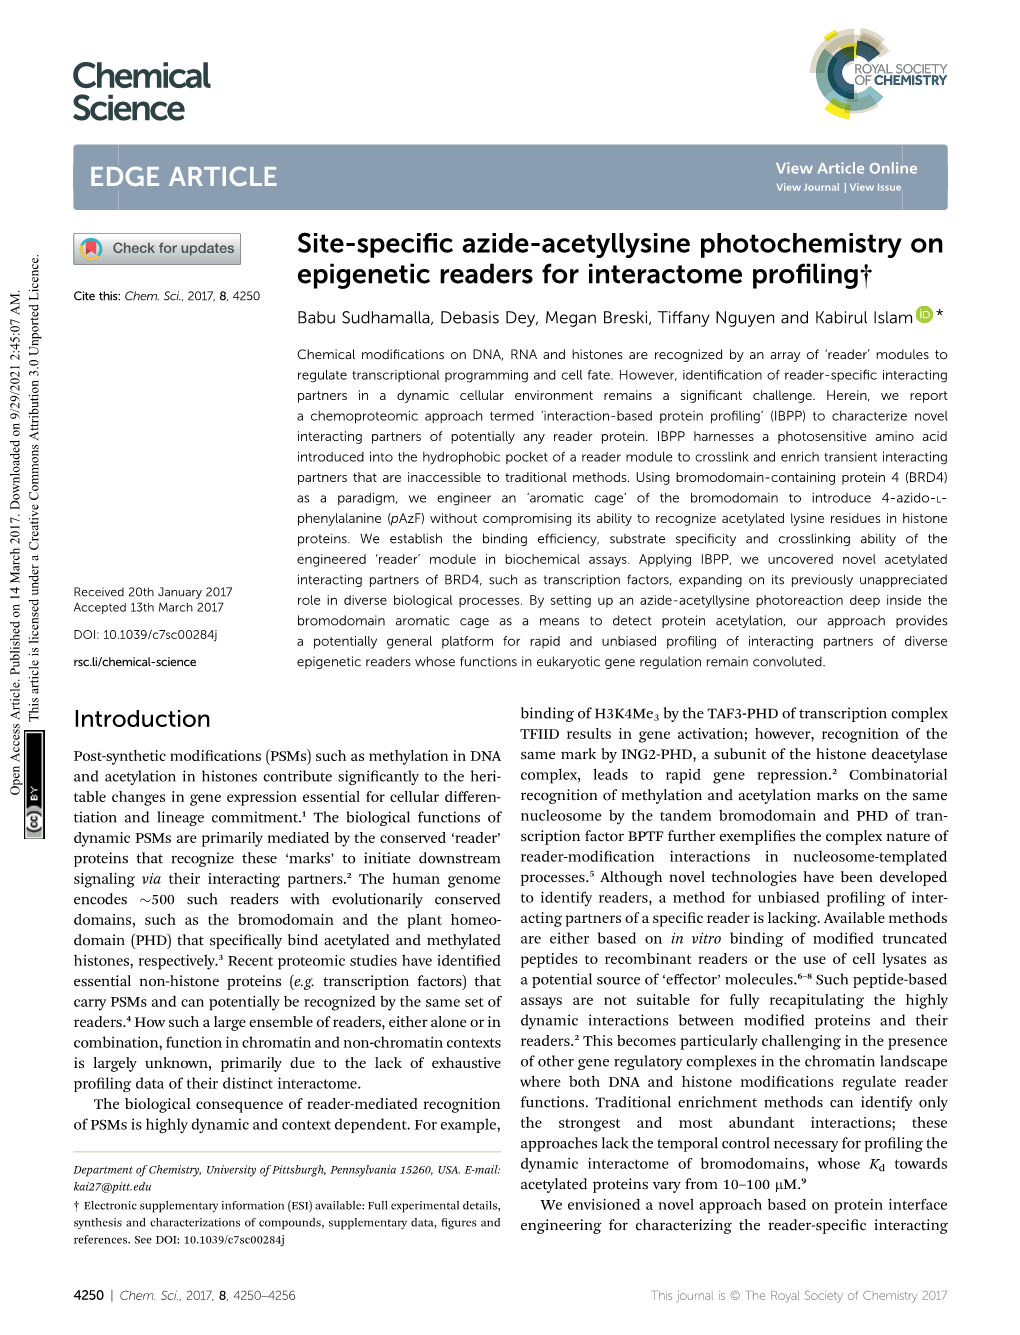 Site-Specific Azide-Acetyllysine Photochemistry on Epigenetic